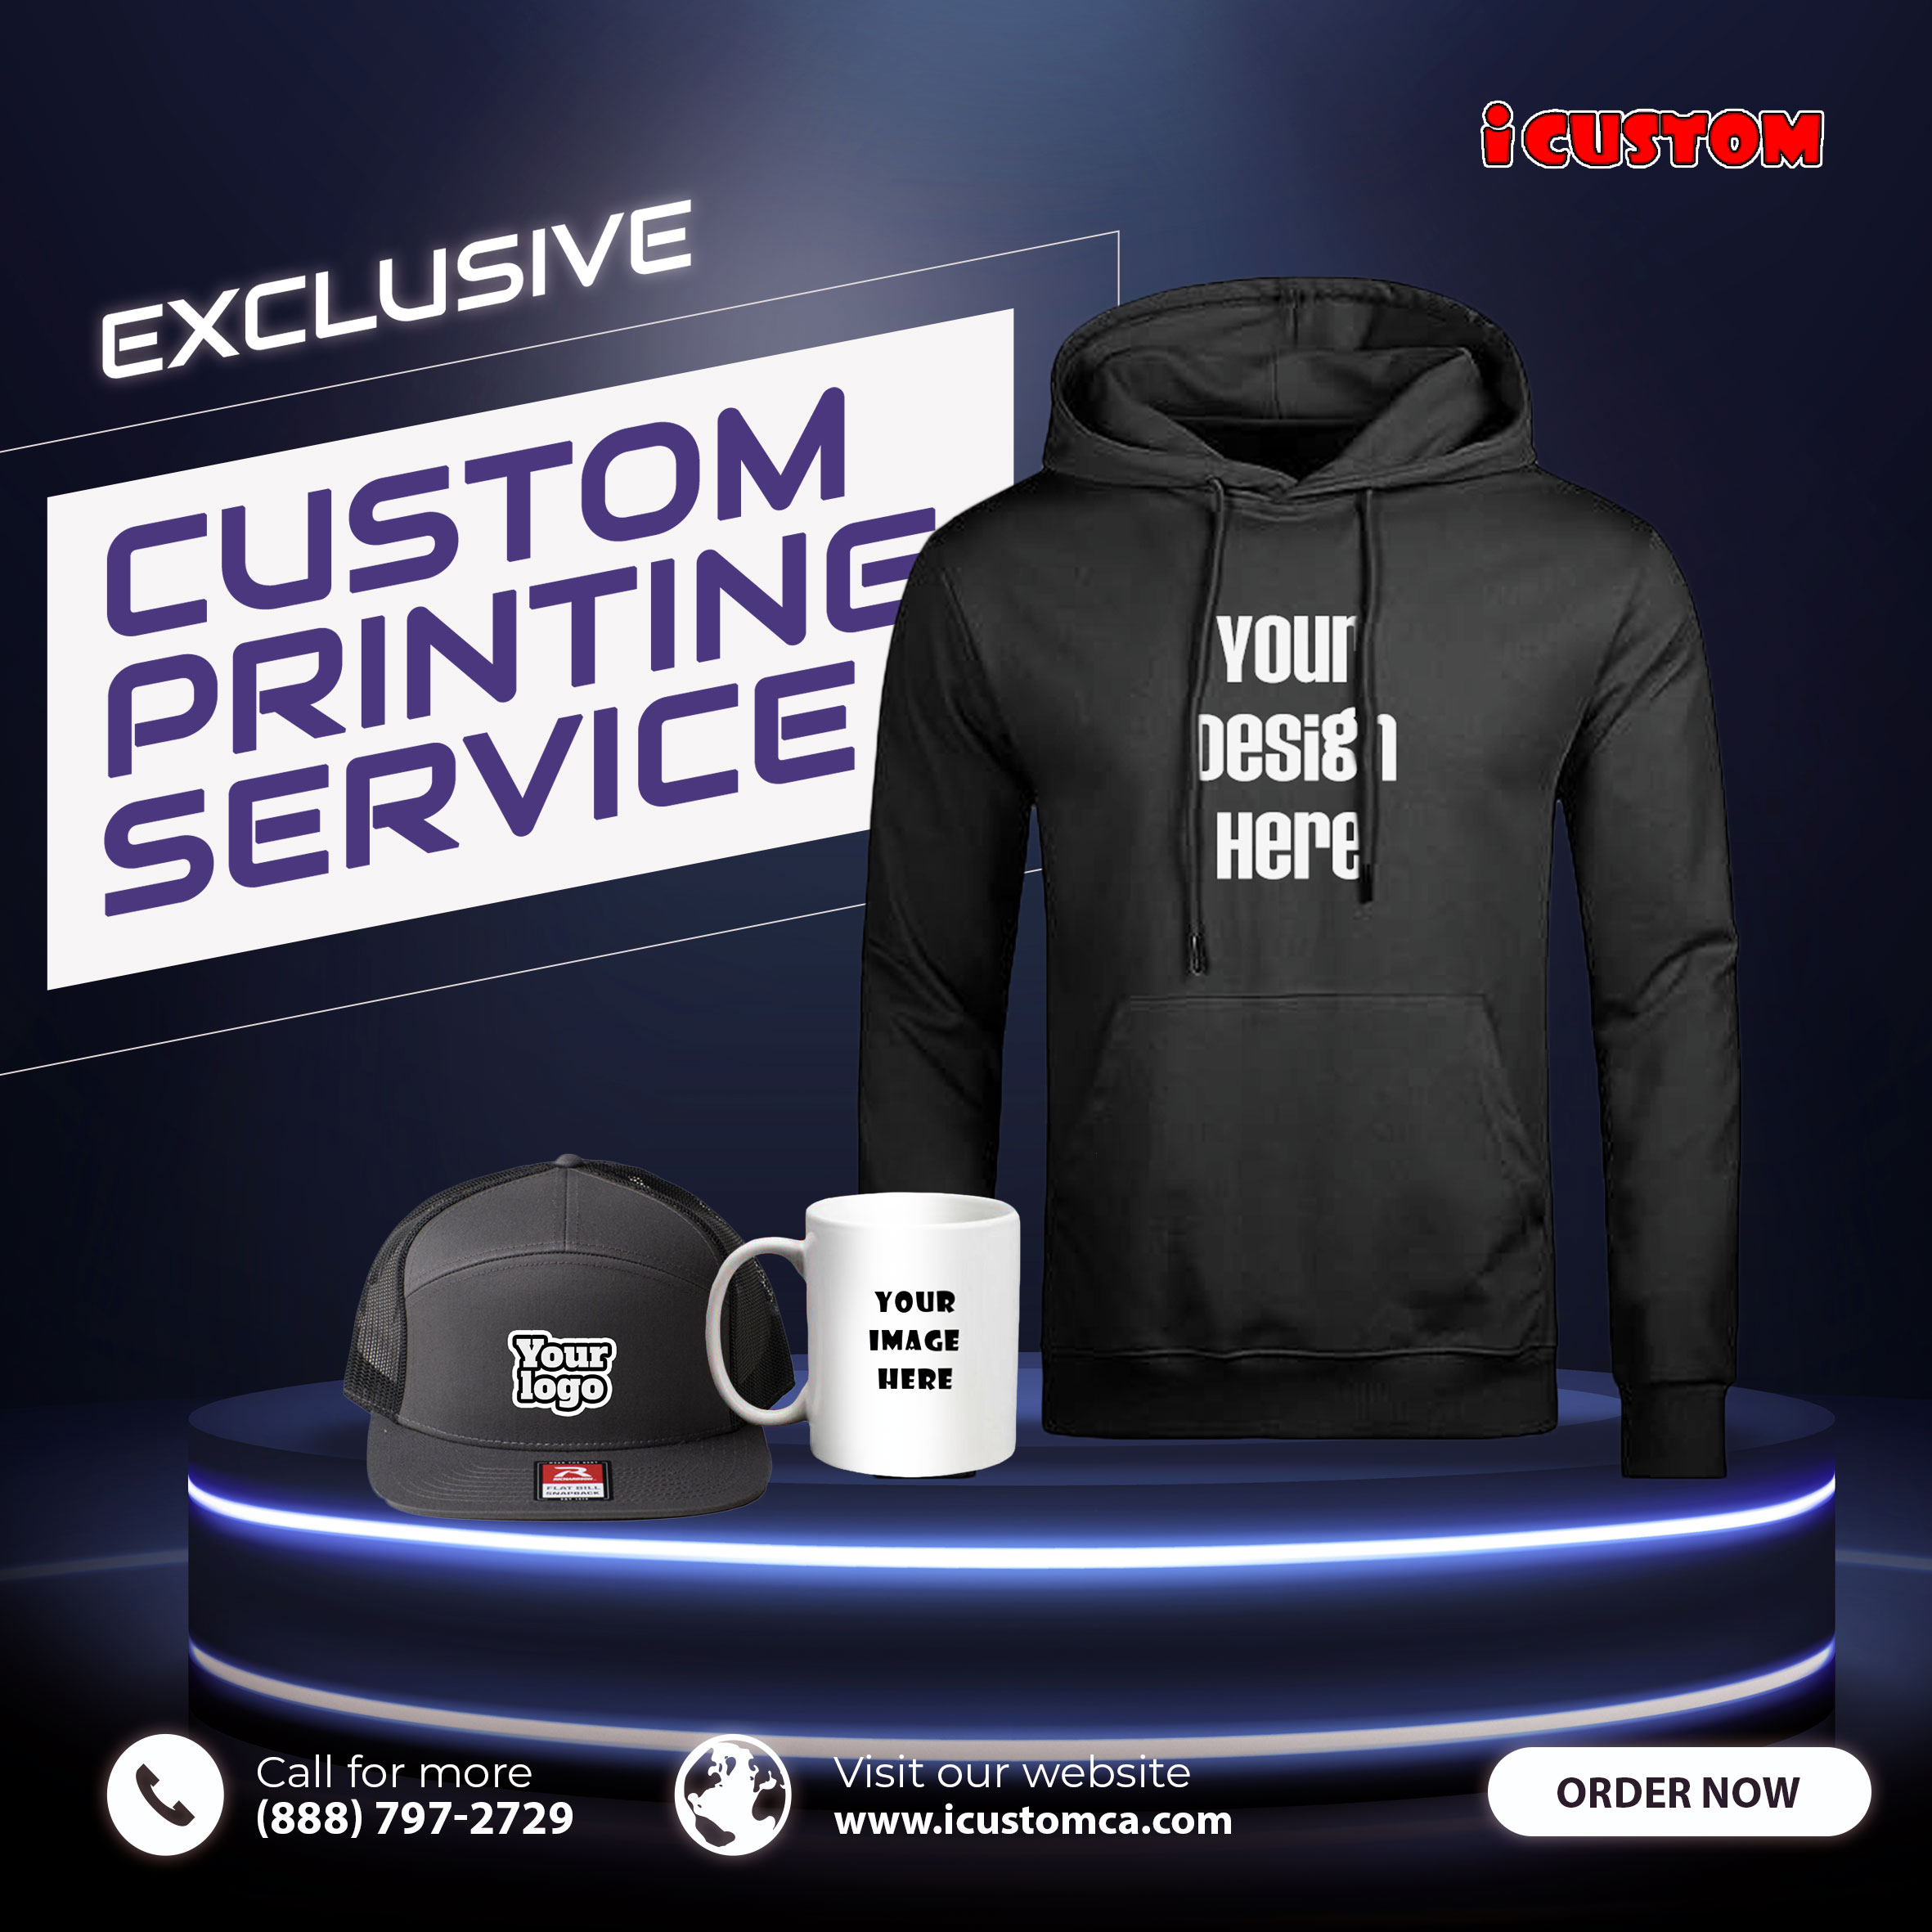 #custom apparel #design your own t-shirt #custom screen printing #customized clothing #memorial shirts #custom t-shirt printing #personalized t-shirts